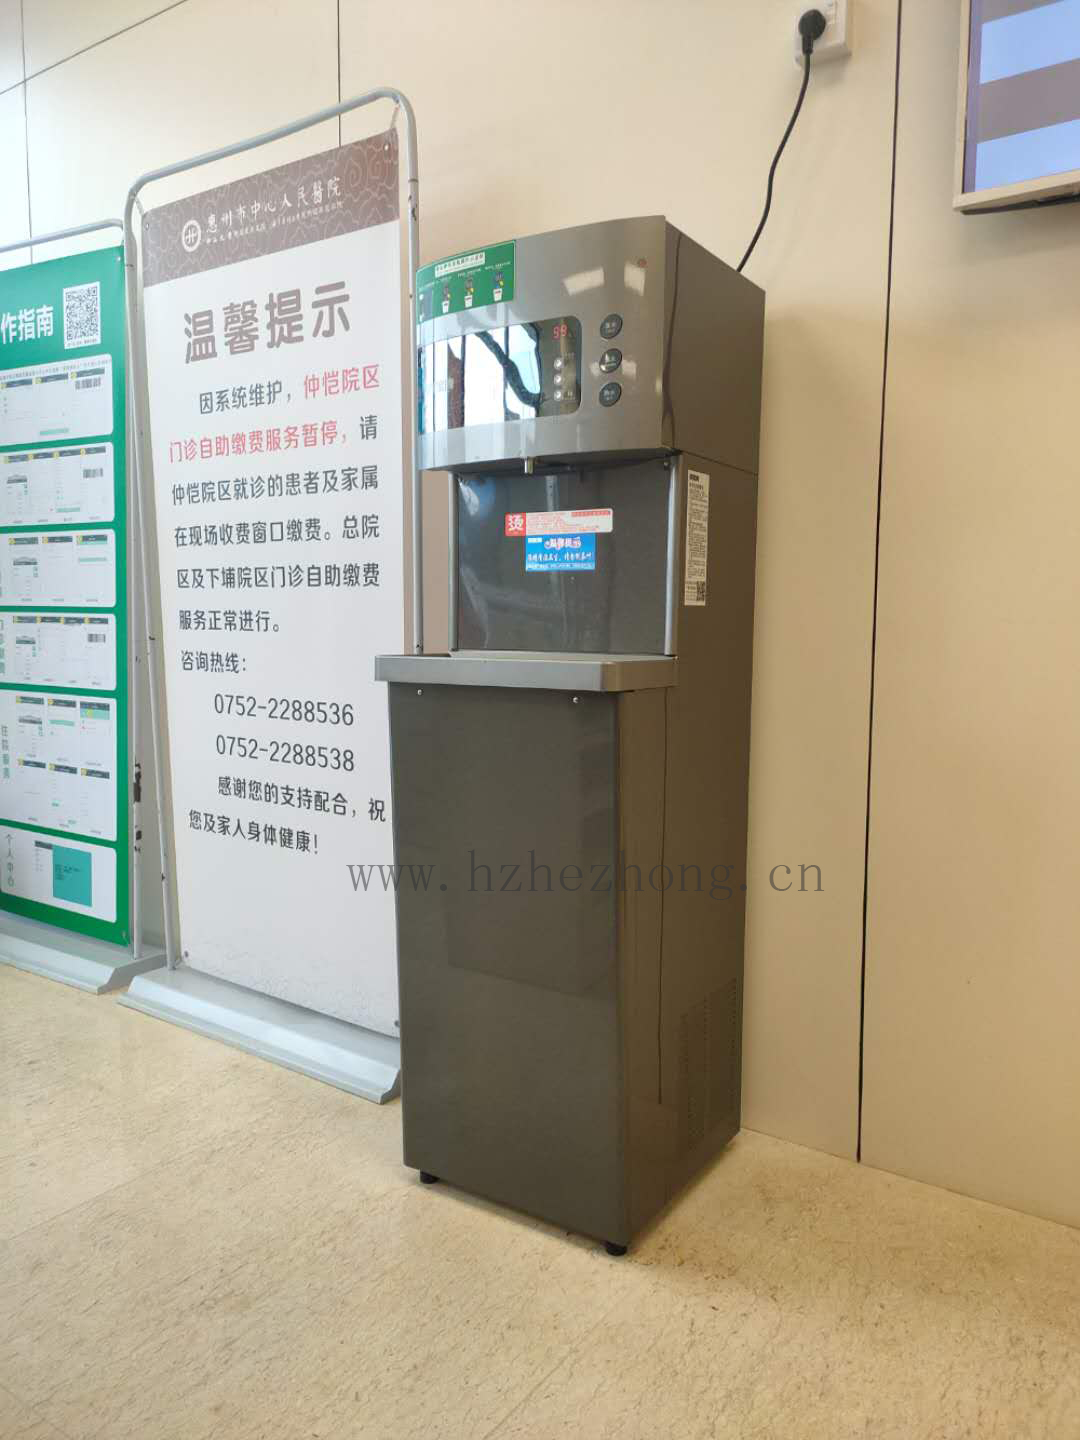 ACUO brand water dispenser entered zhongkai High-tech Zone People's Hospital